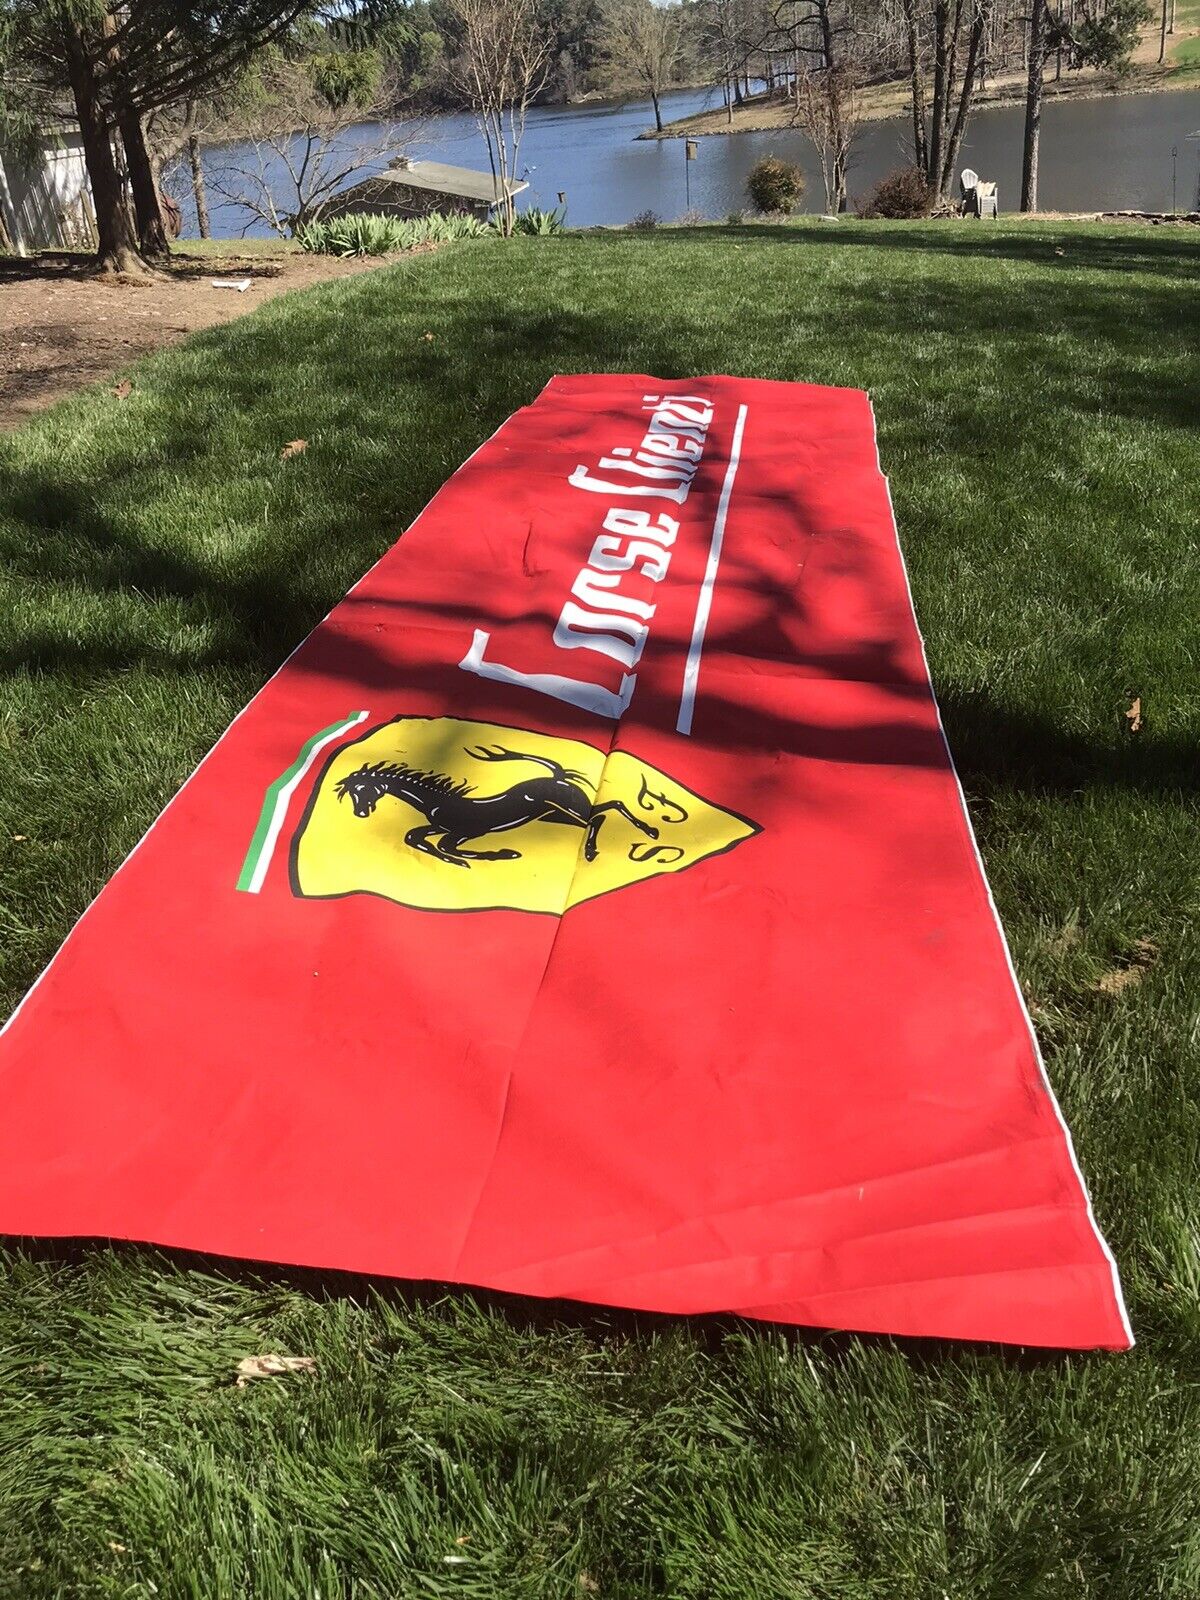 Ferrari race banner